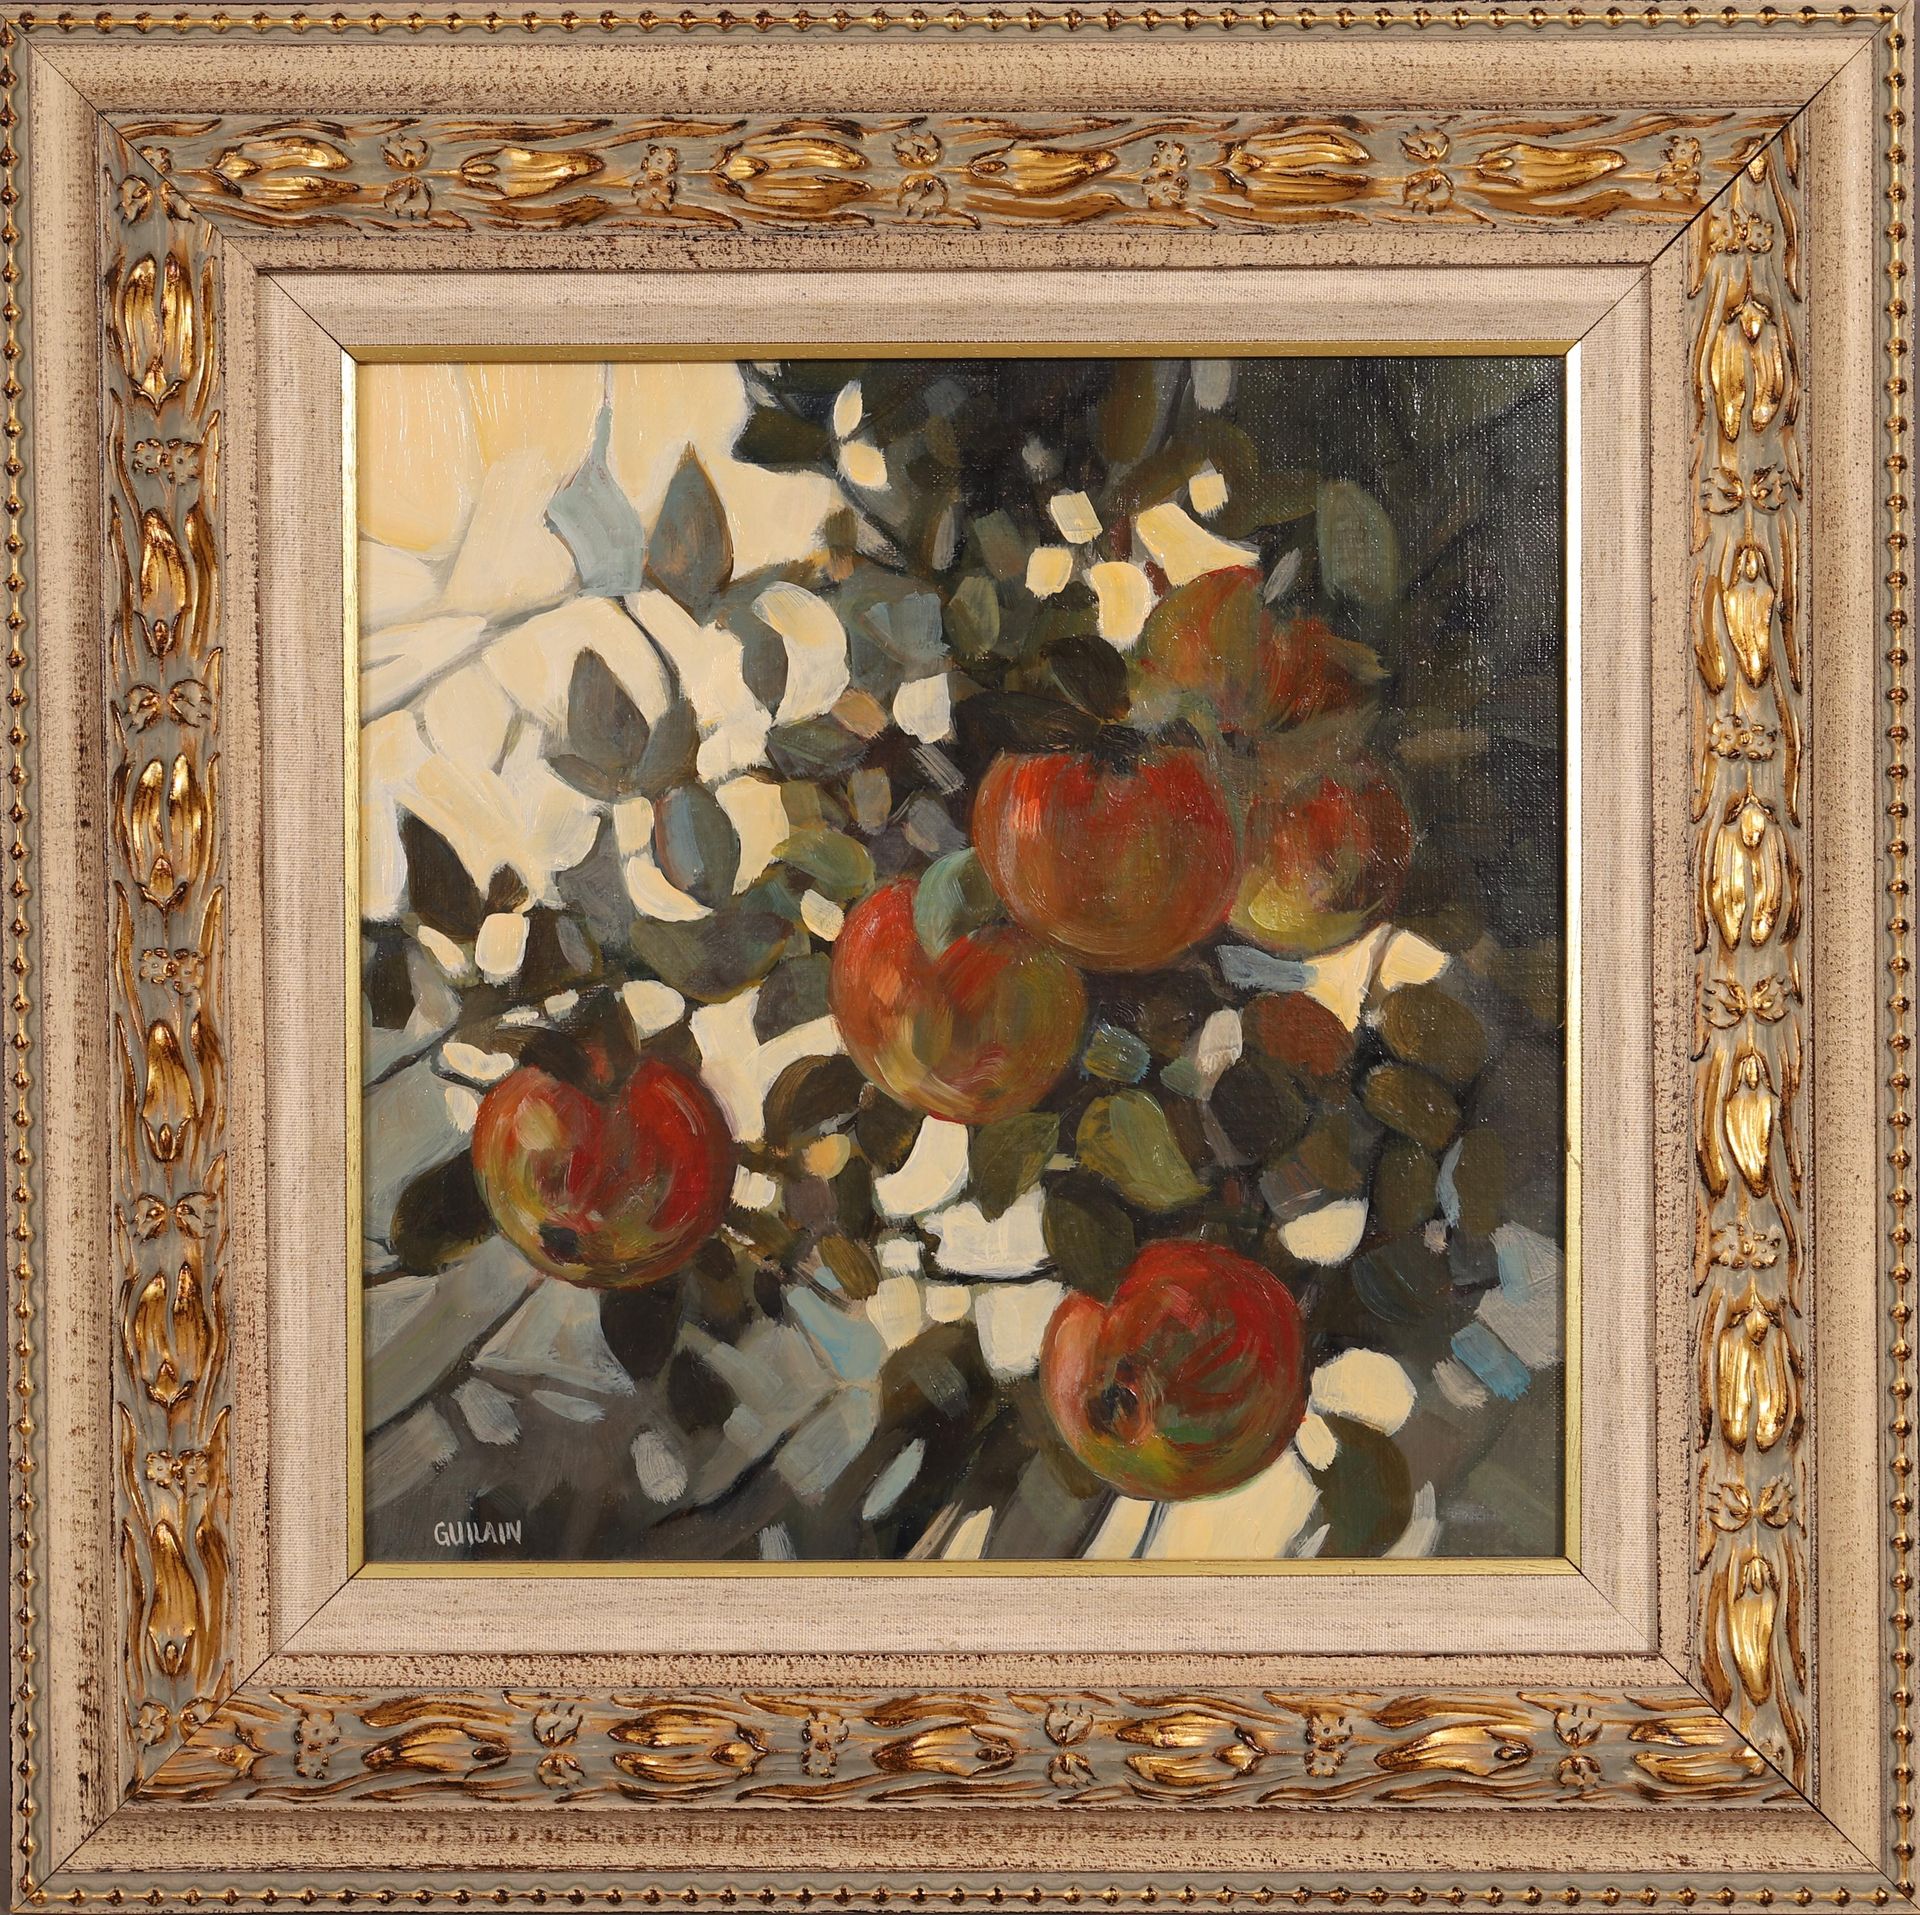 Null Bernard GUILAIN（生于1955年）。

法国画家

布面油画，苹果树

左下方有签名

外观尺寸：高：30，宽：30厘米